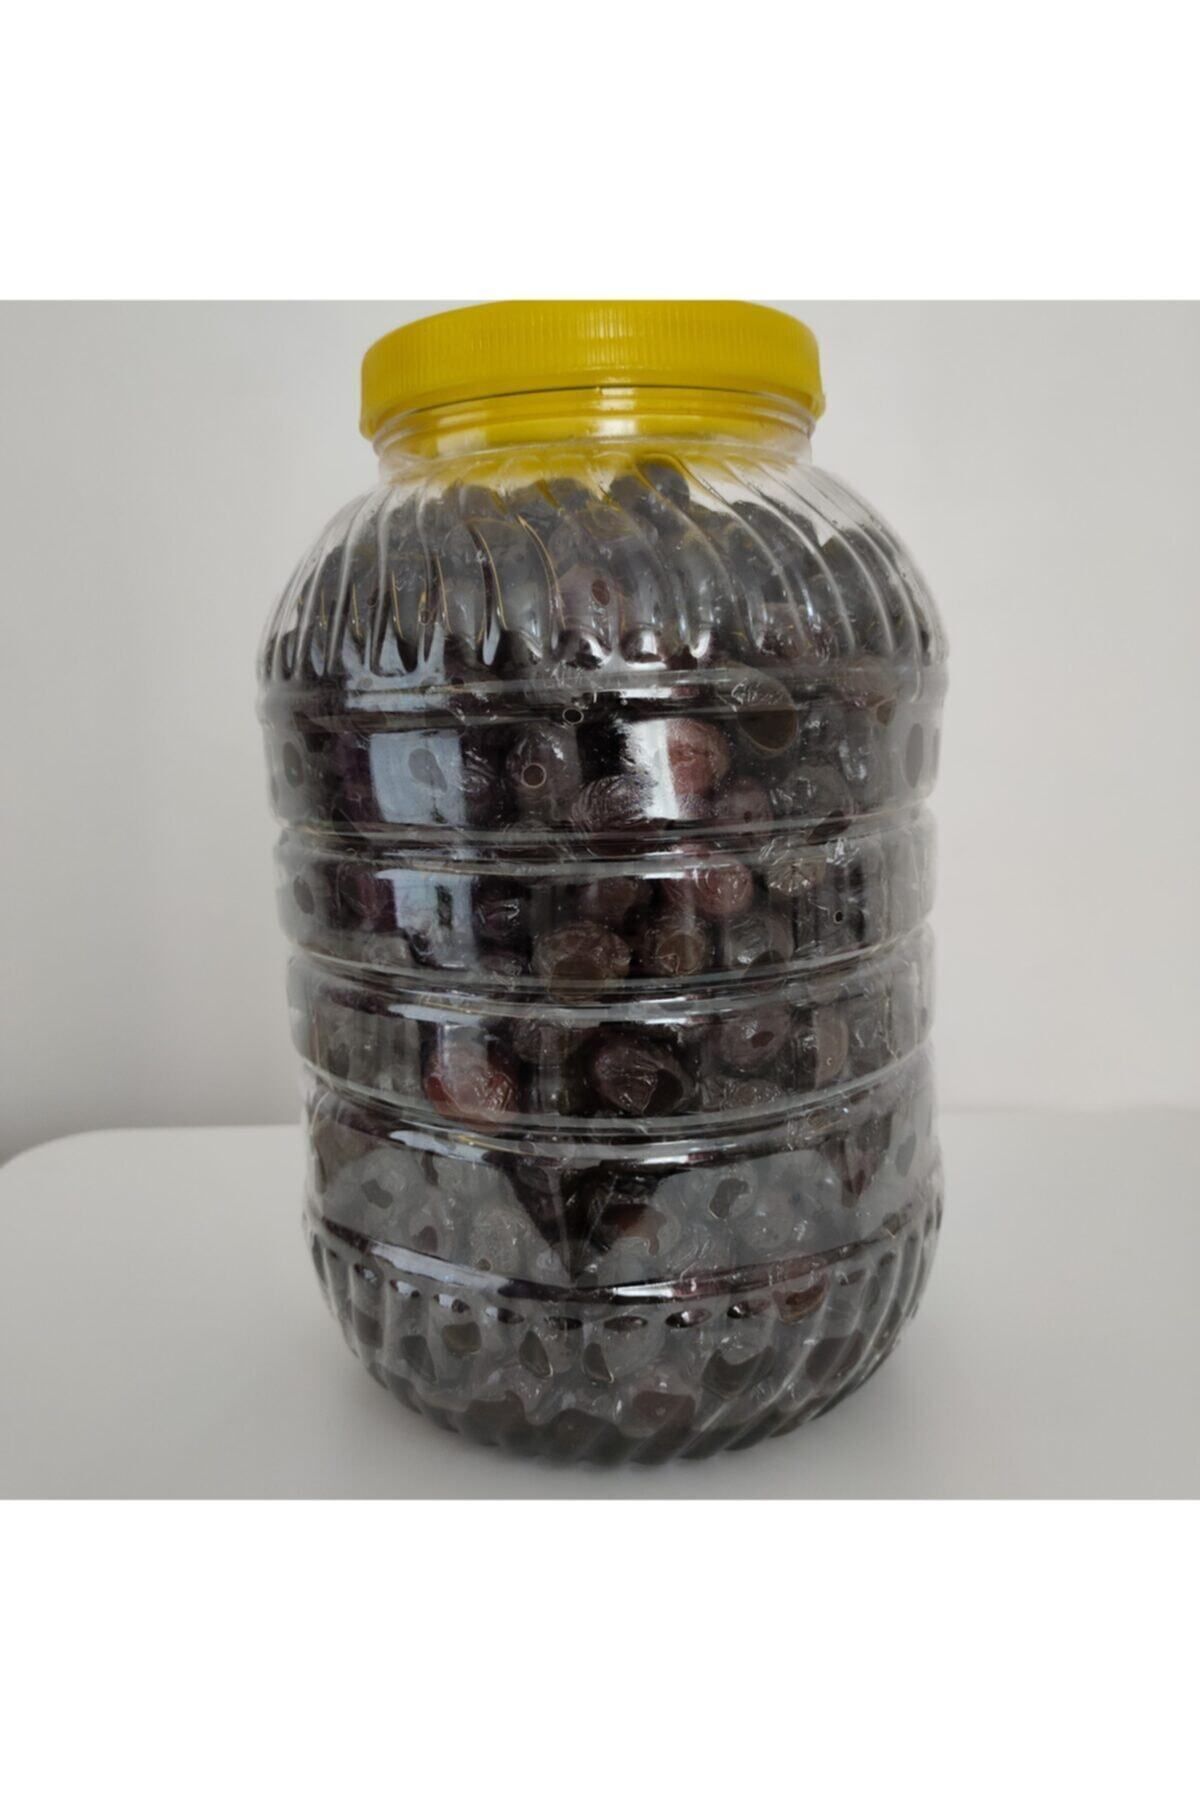 mut incisi zeytin & zeytinyağı Az Tuzlu Siyah Zeytin Net:3 Kg